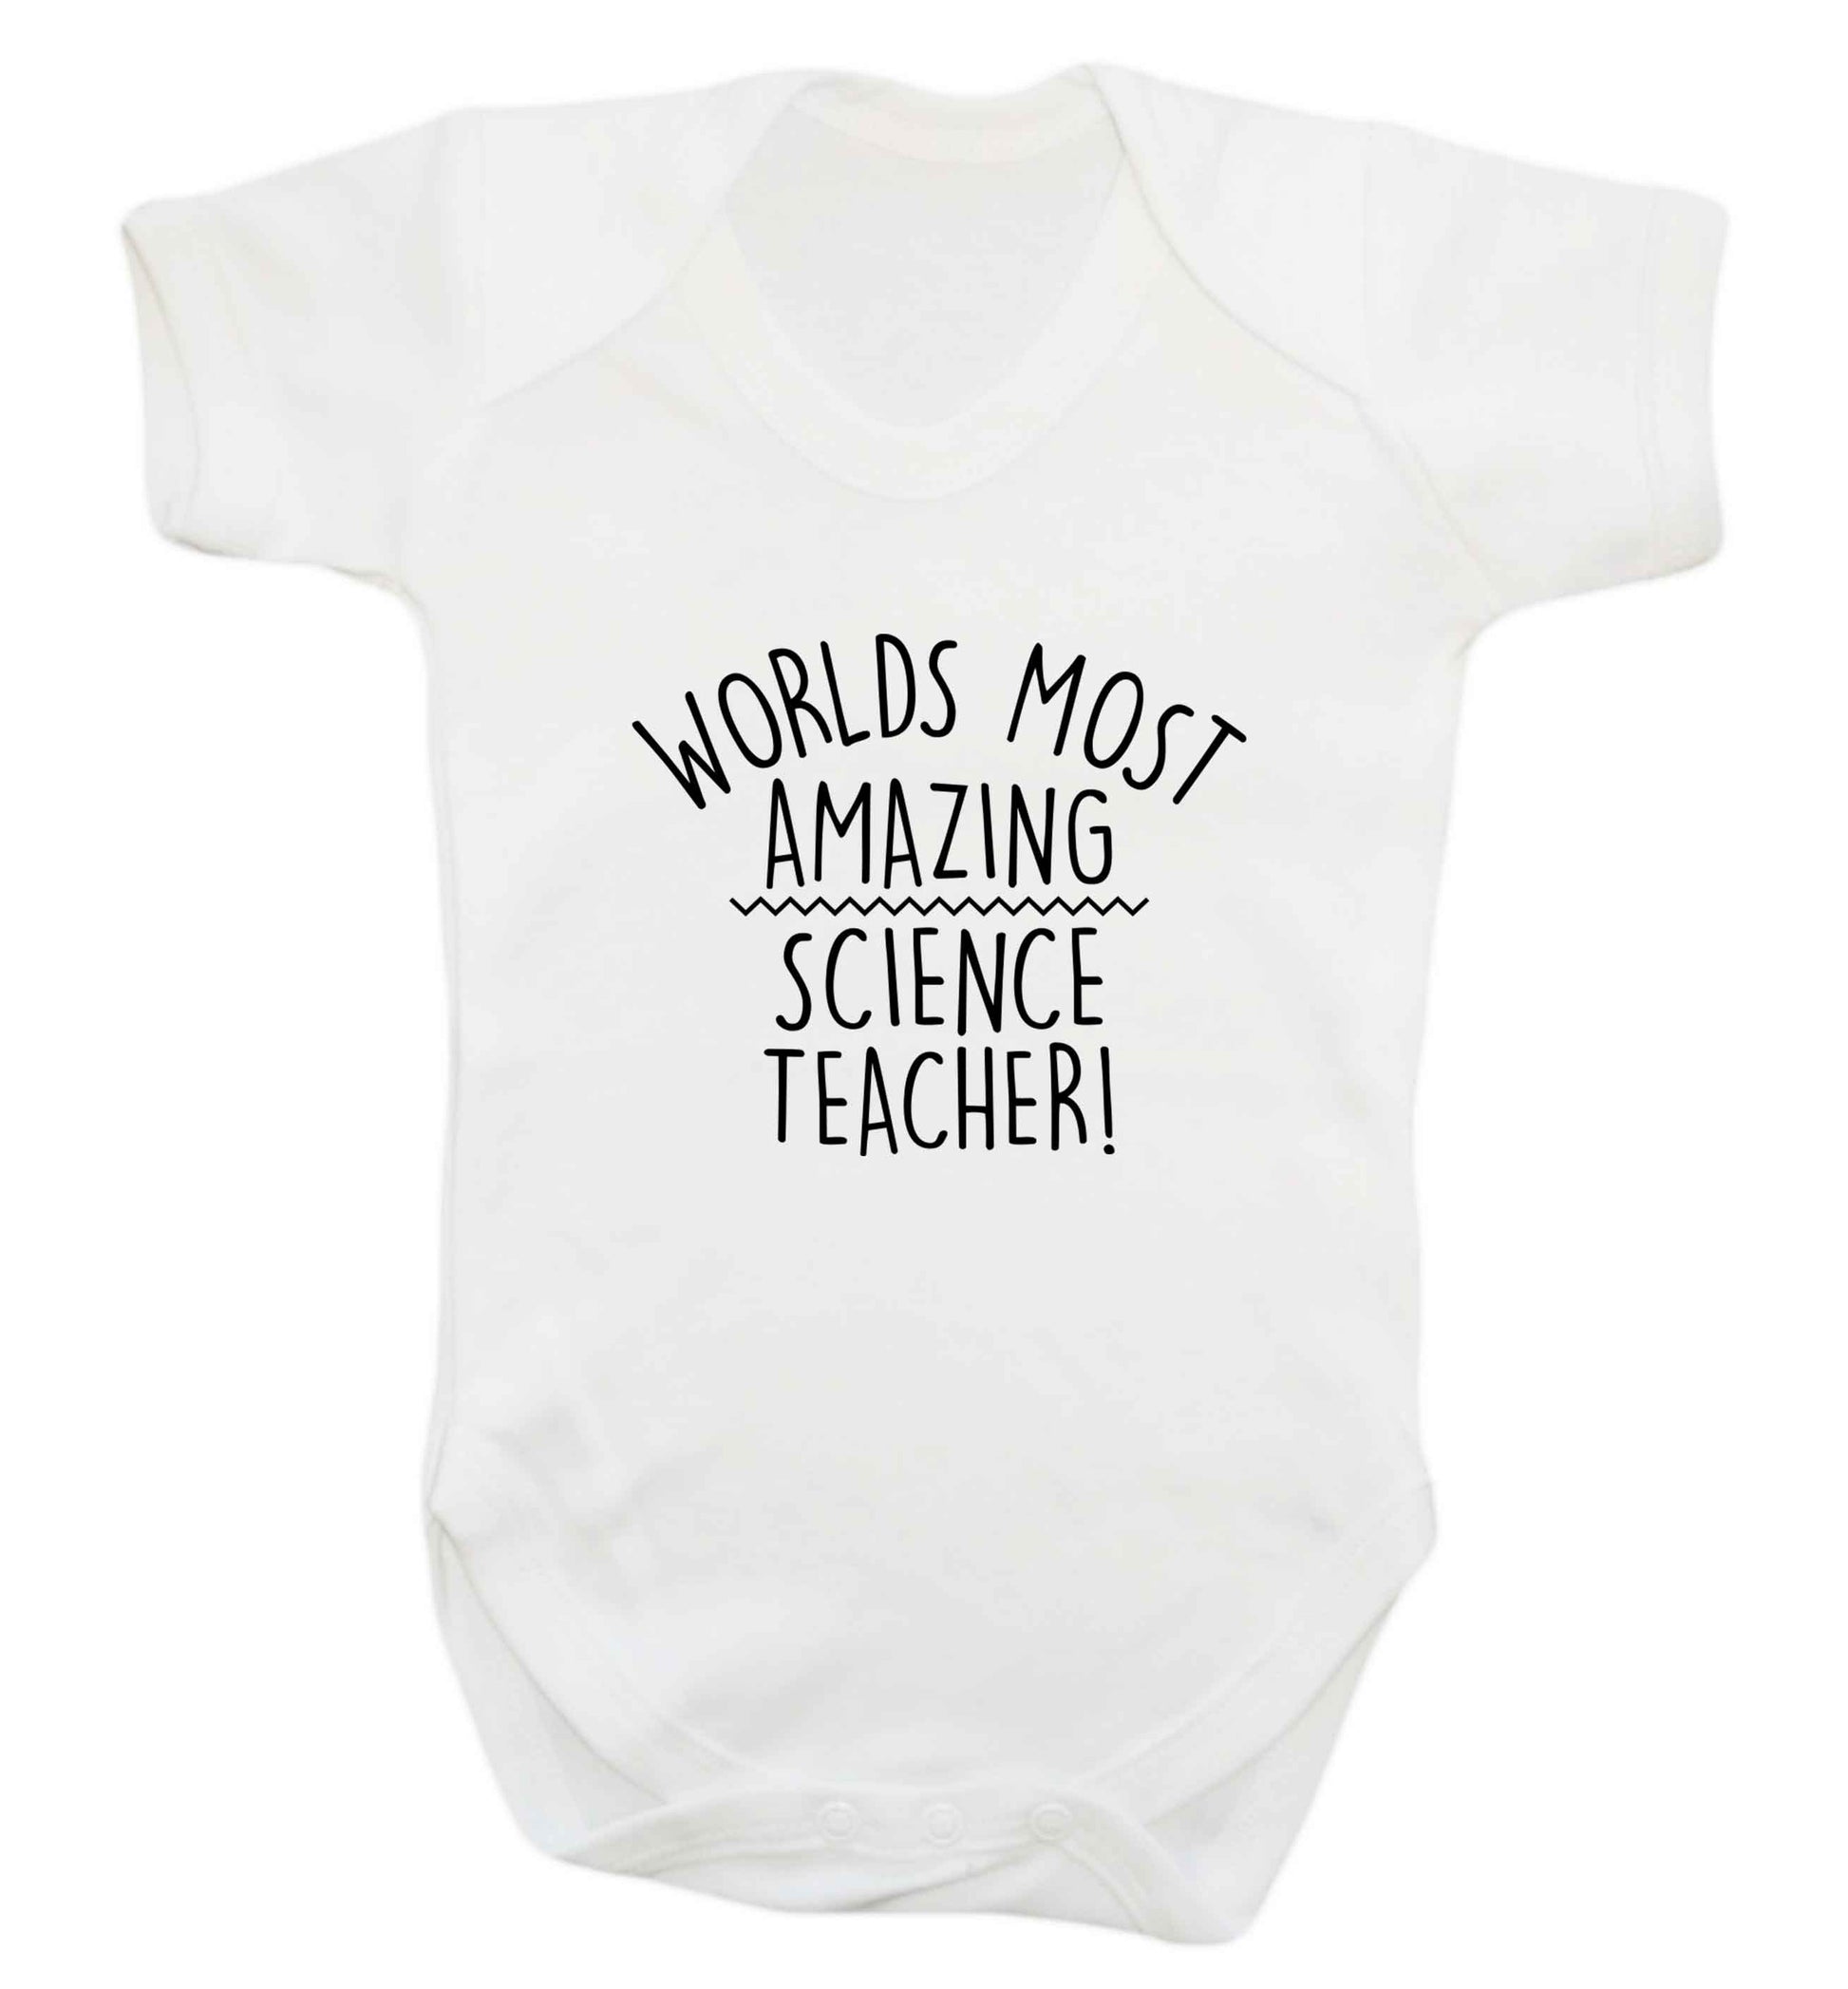 Worlds most amazing science teacher baby vest white 18-24 months